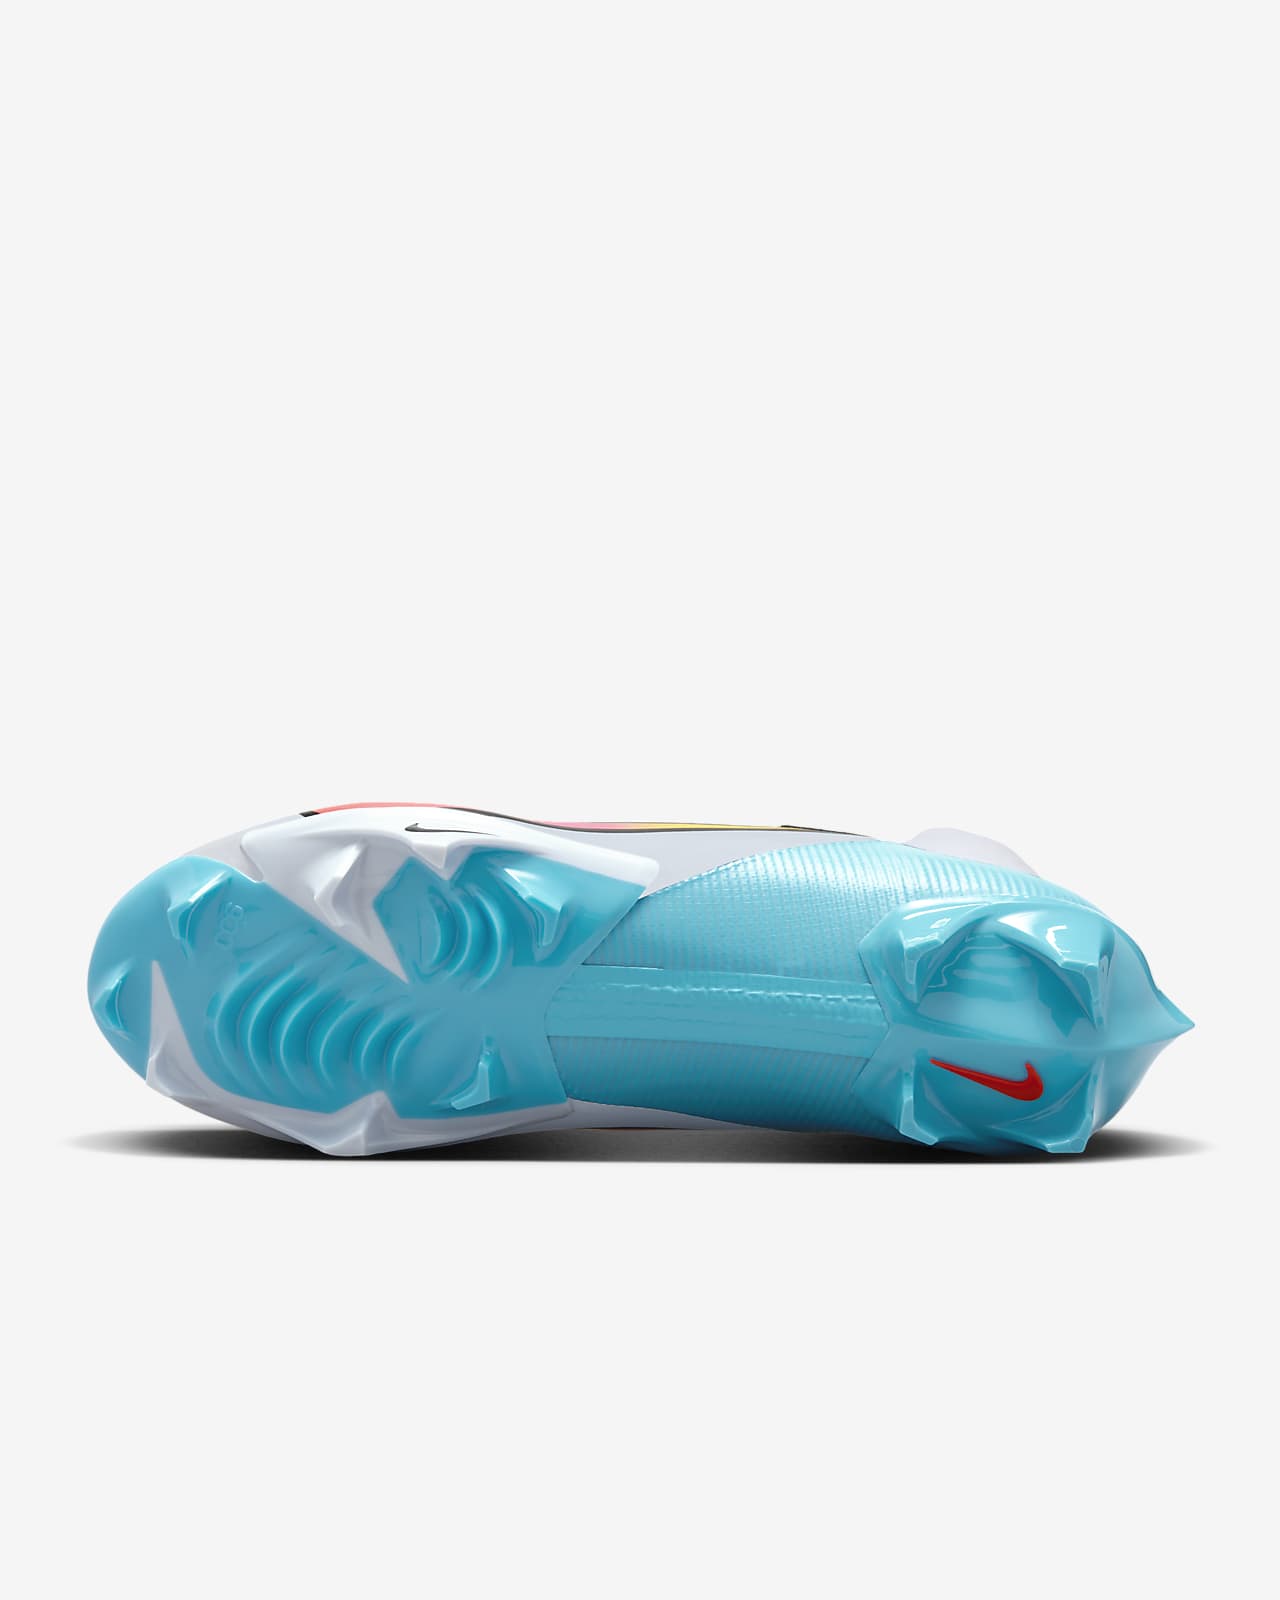 Spider” Nike Vapor Edge Pro 360 Cleats